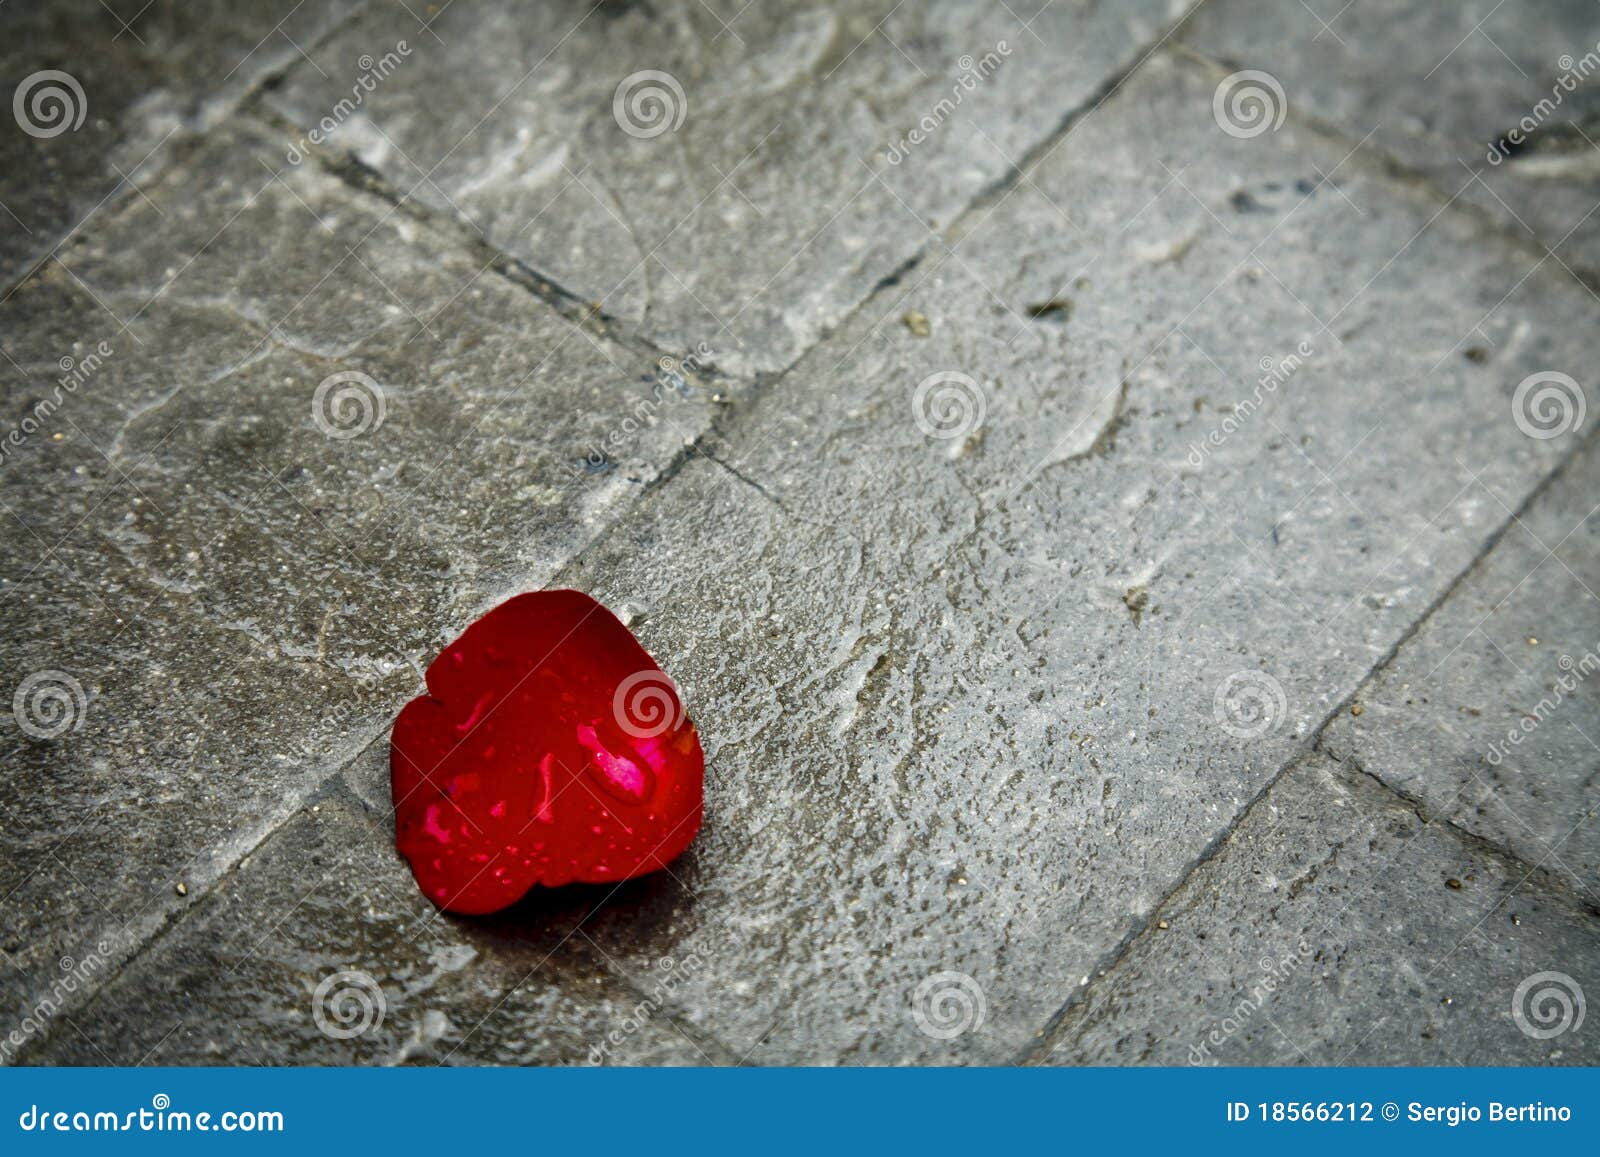 Red rose petal on sidewalk stock photo. Image of single - 18566212